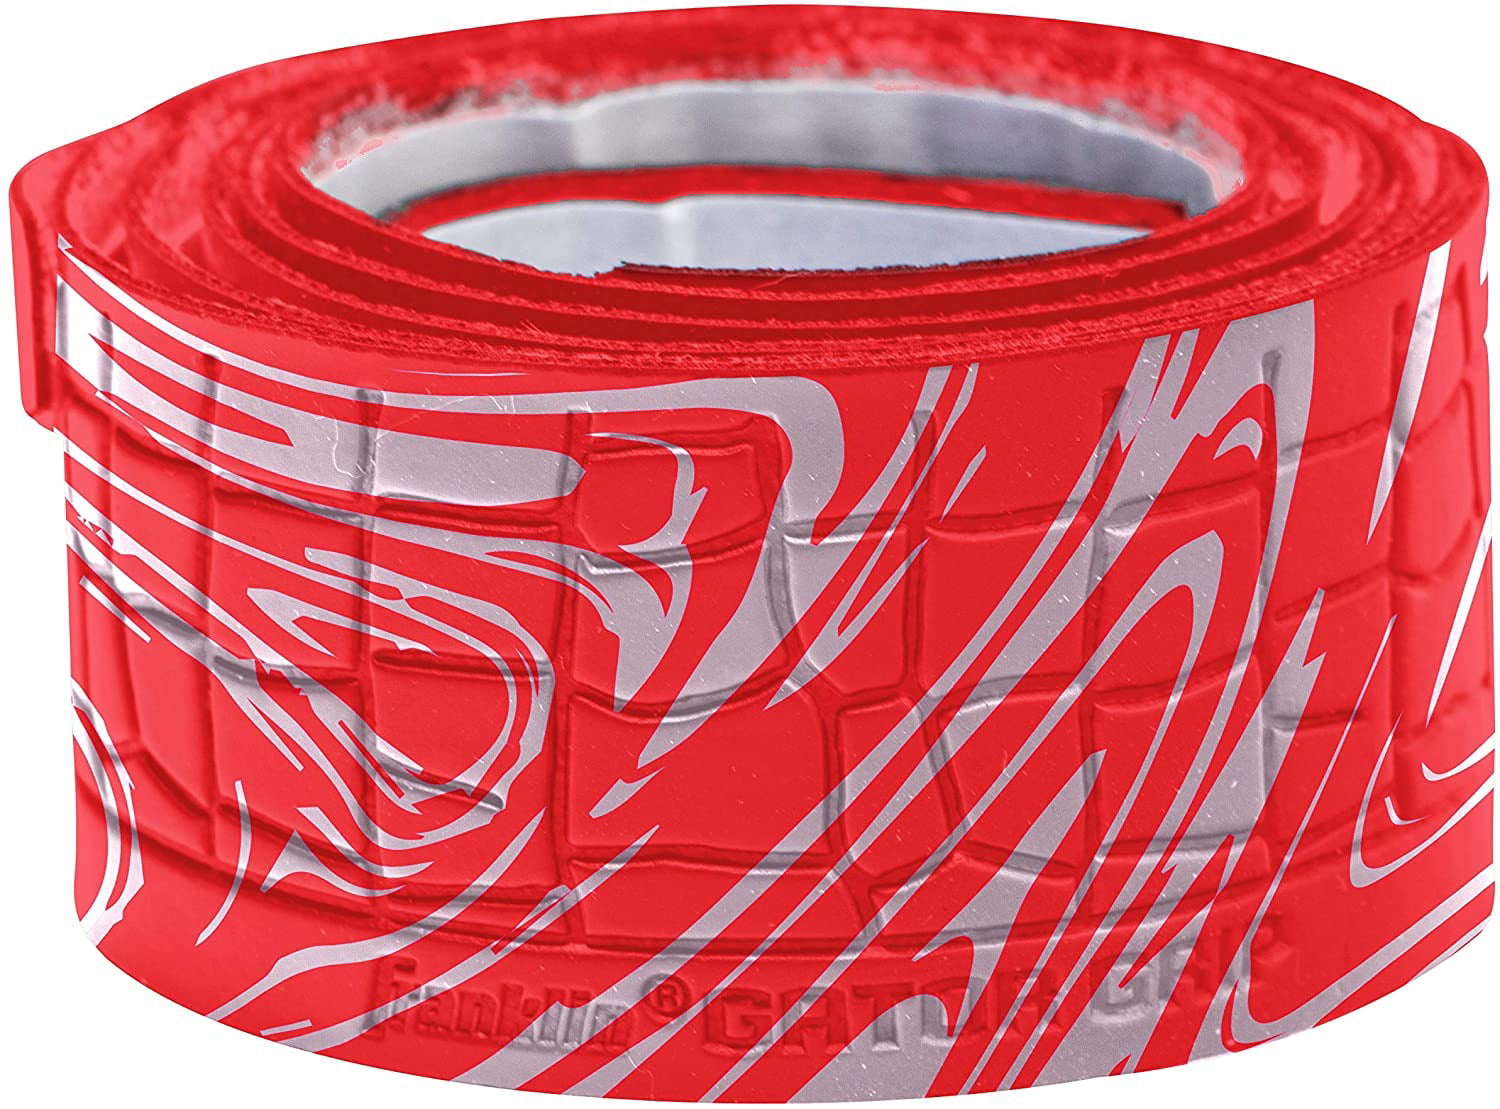 Softball and baseball bat Red Camo Color Bat grip tape Red Camo 1.1mm 